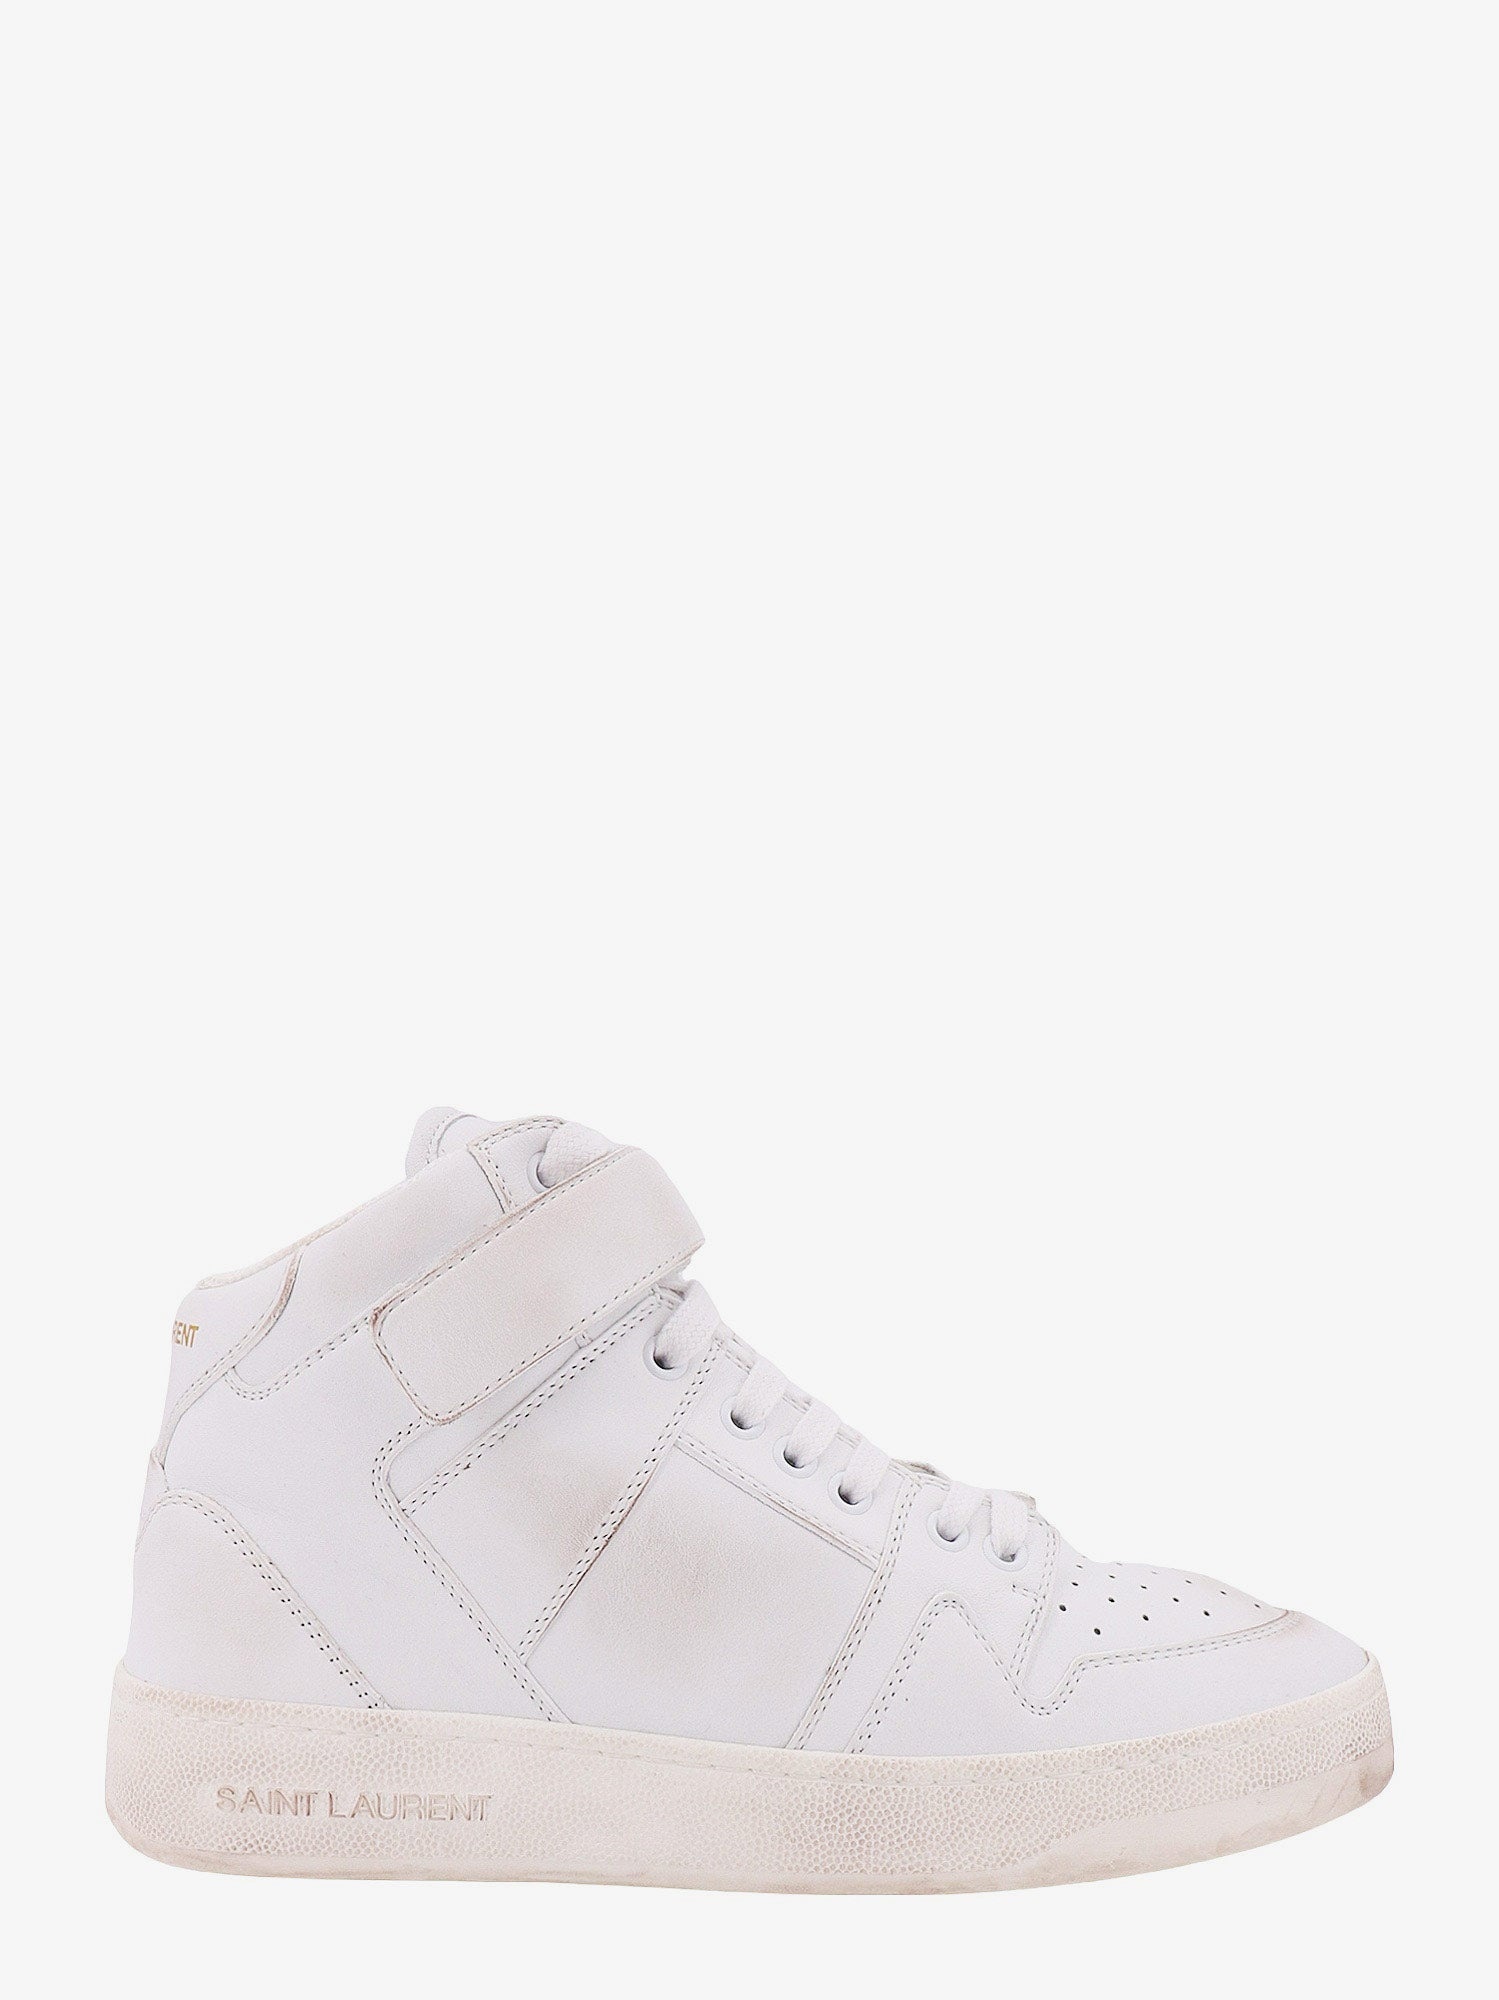 Saint Laurent Man Lax Man White Sneakers - 1